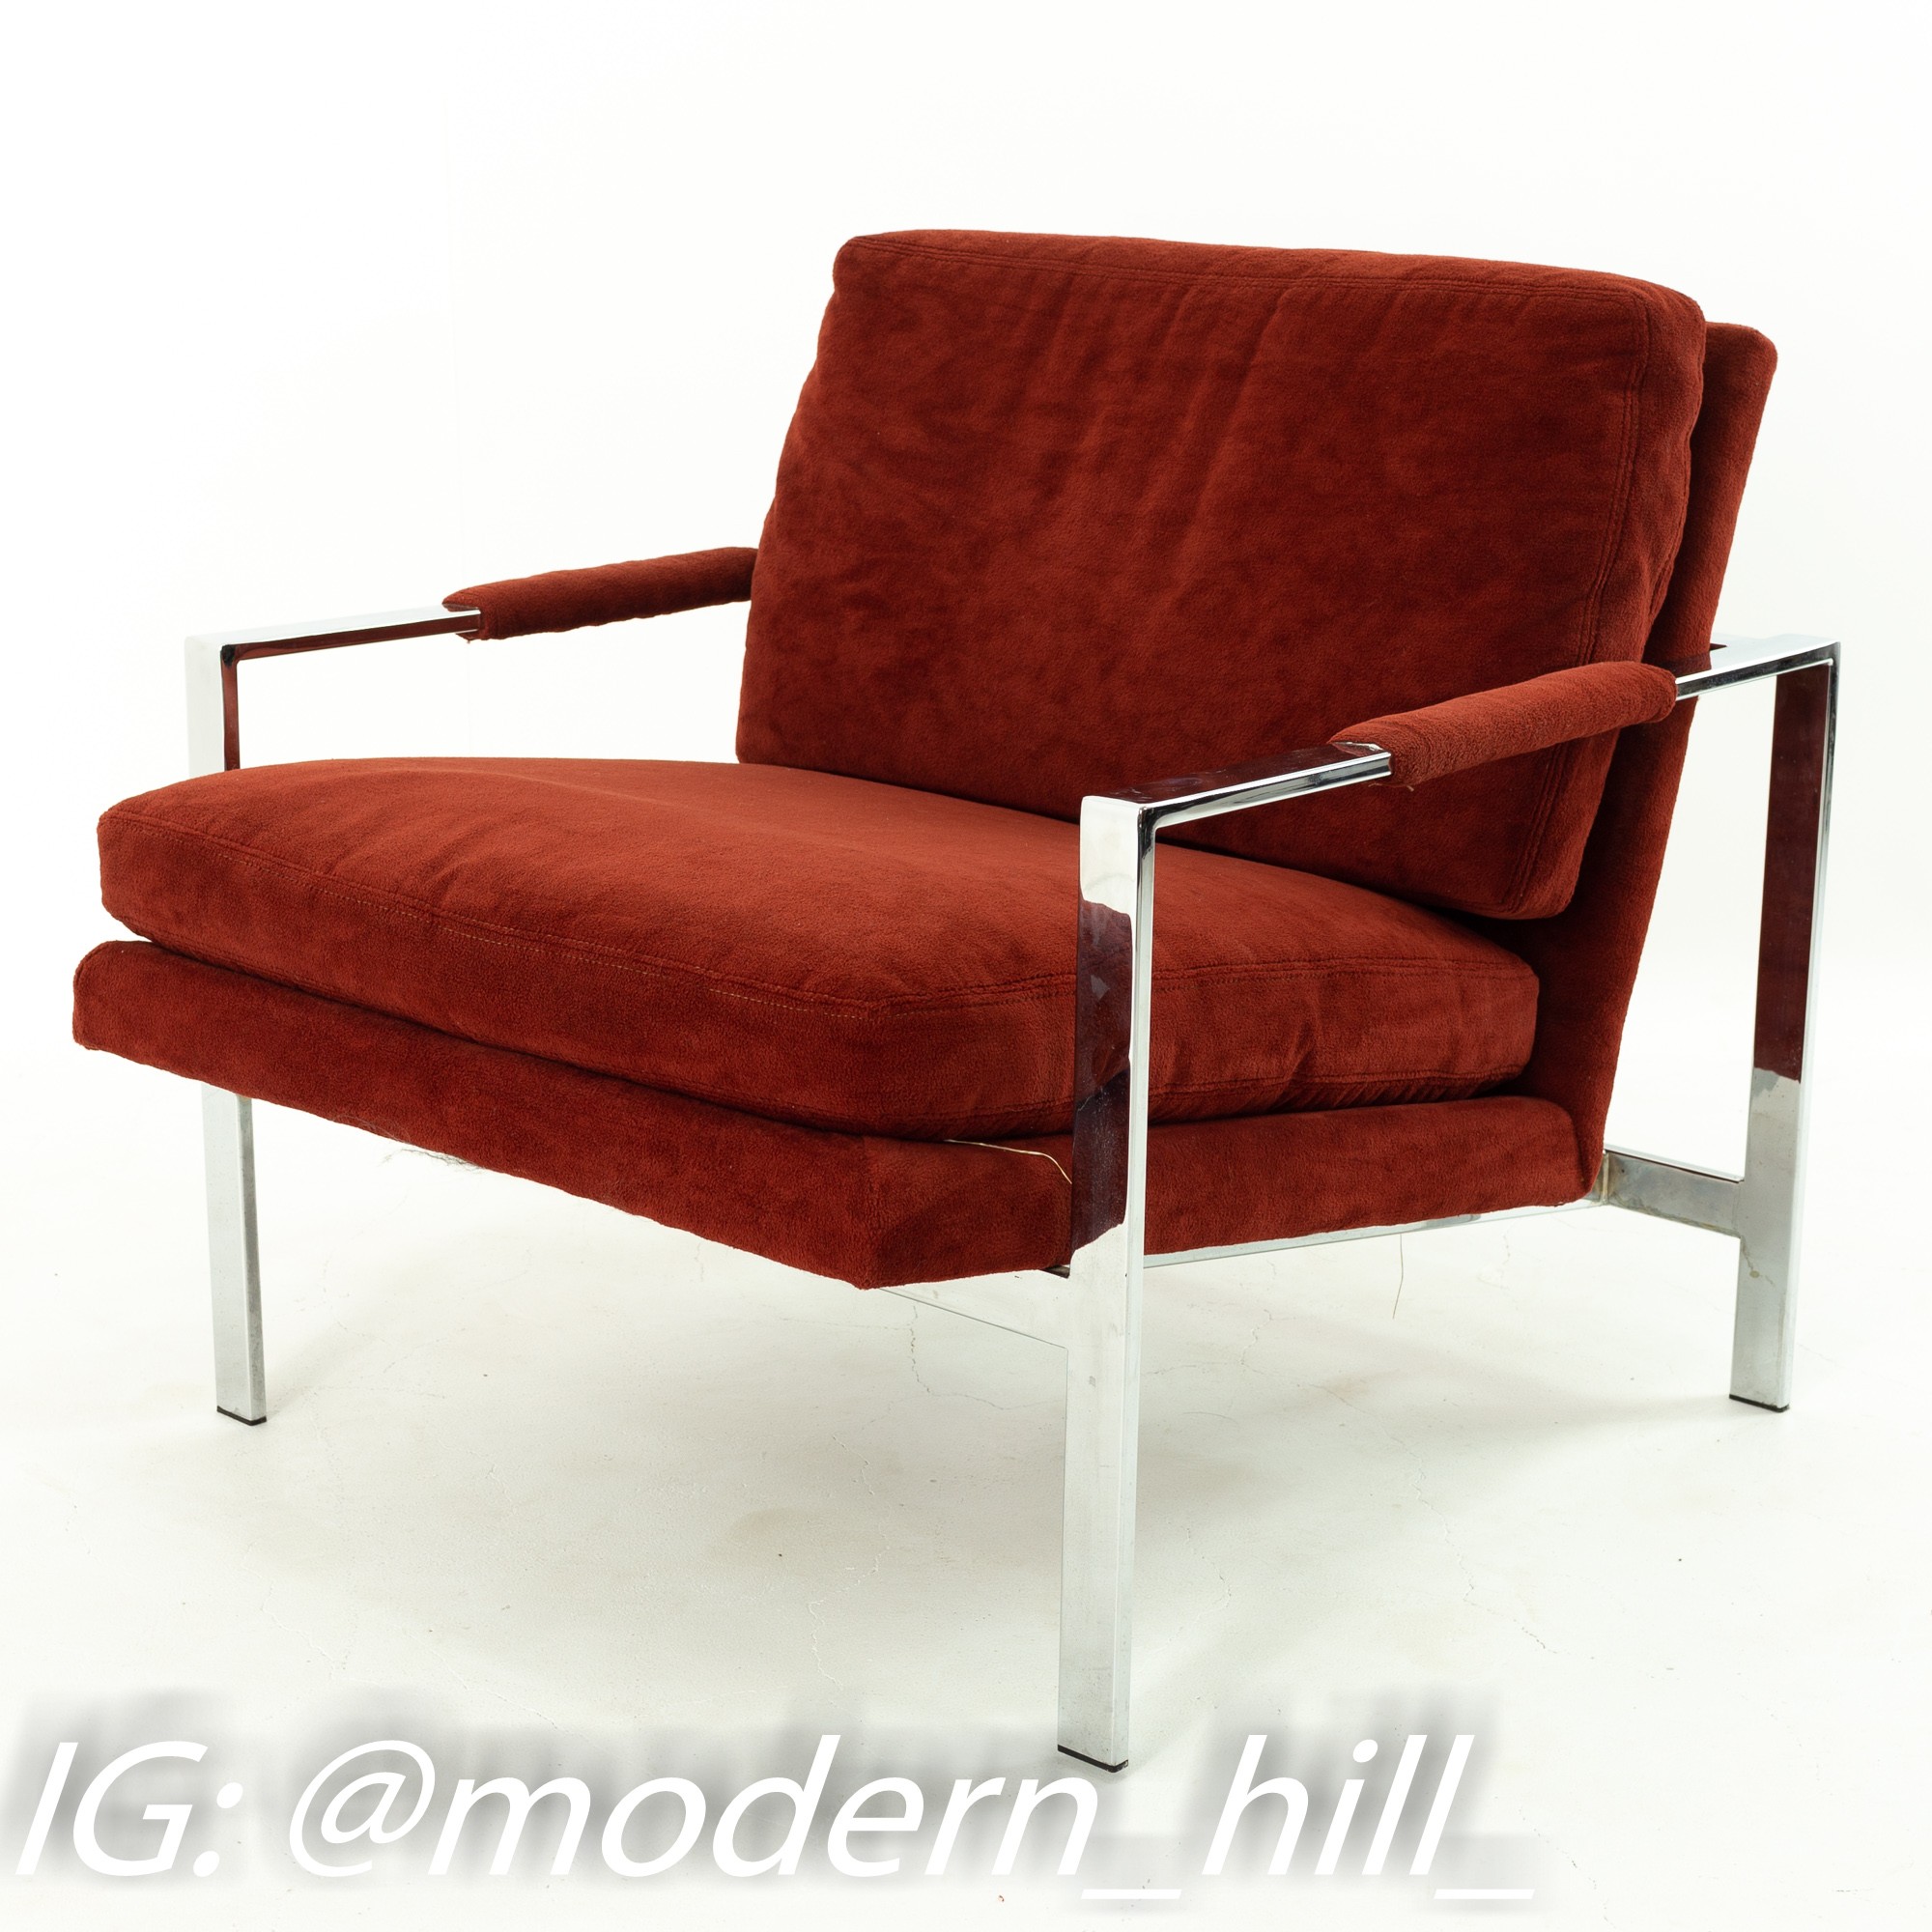 Patrician Furniture Company Milo Baughman Style Mid Century Chrome Lounge Chair